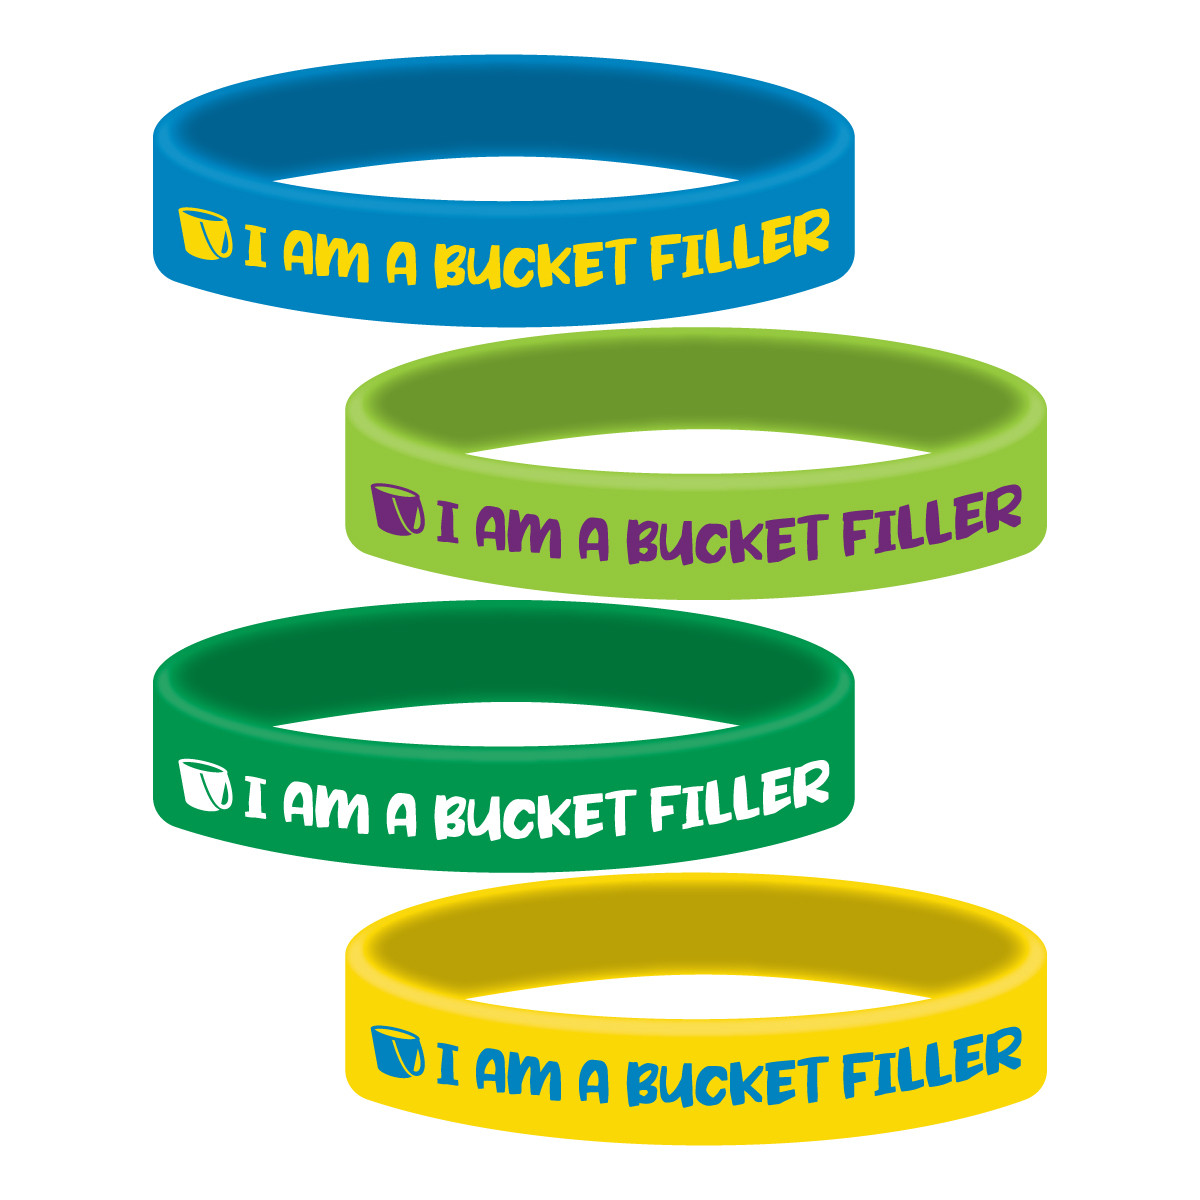 Custom Screen Printed Silicone Wristbands - I am a Bucket Filler 